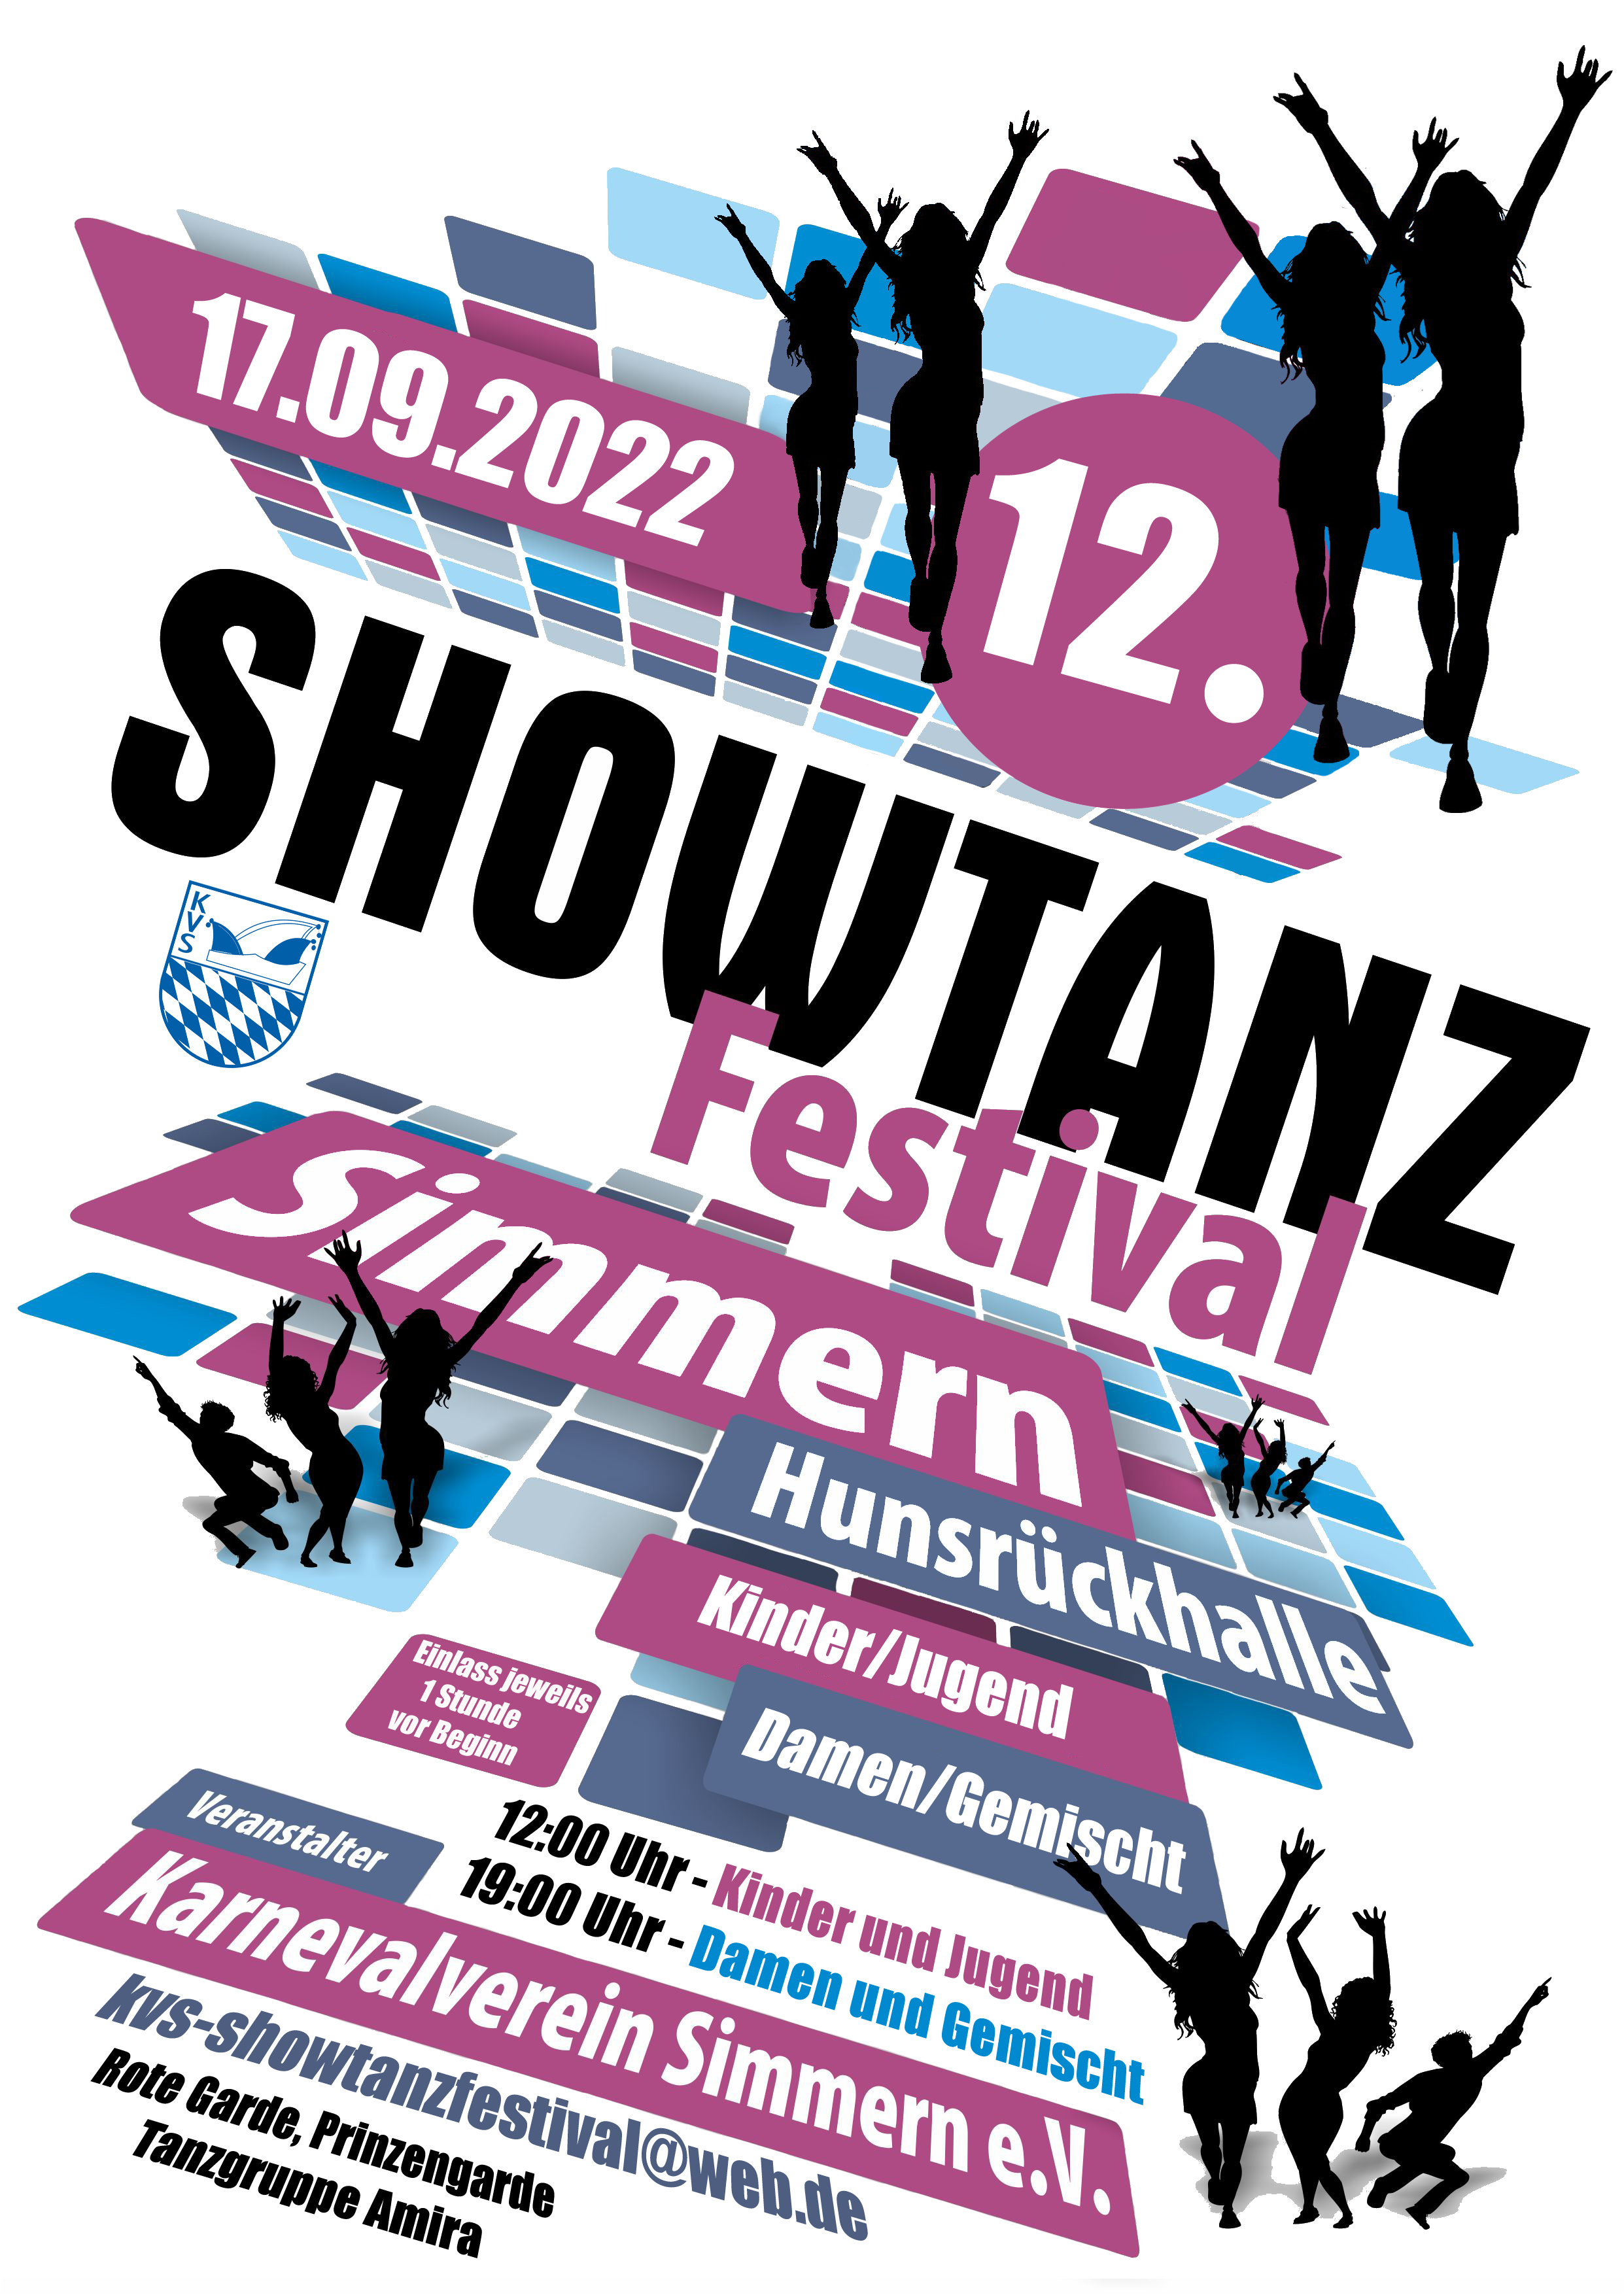 PlakatShowtanzfestival2022